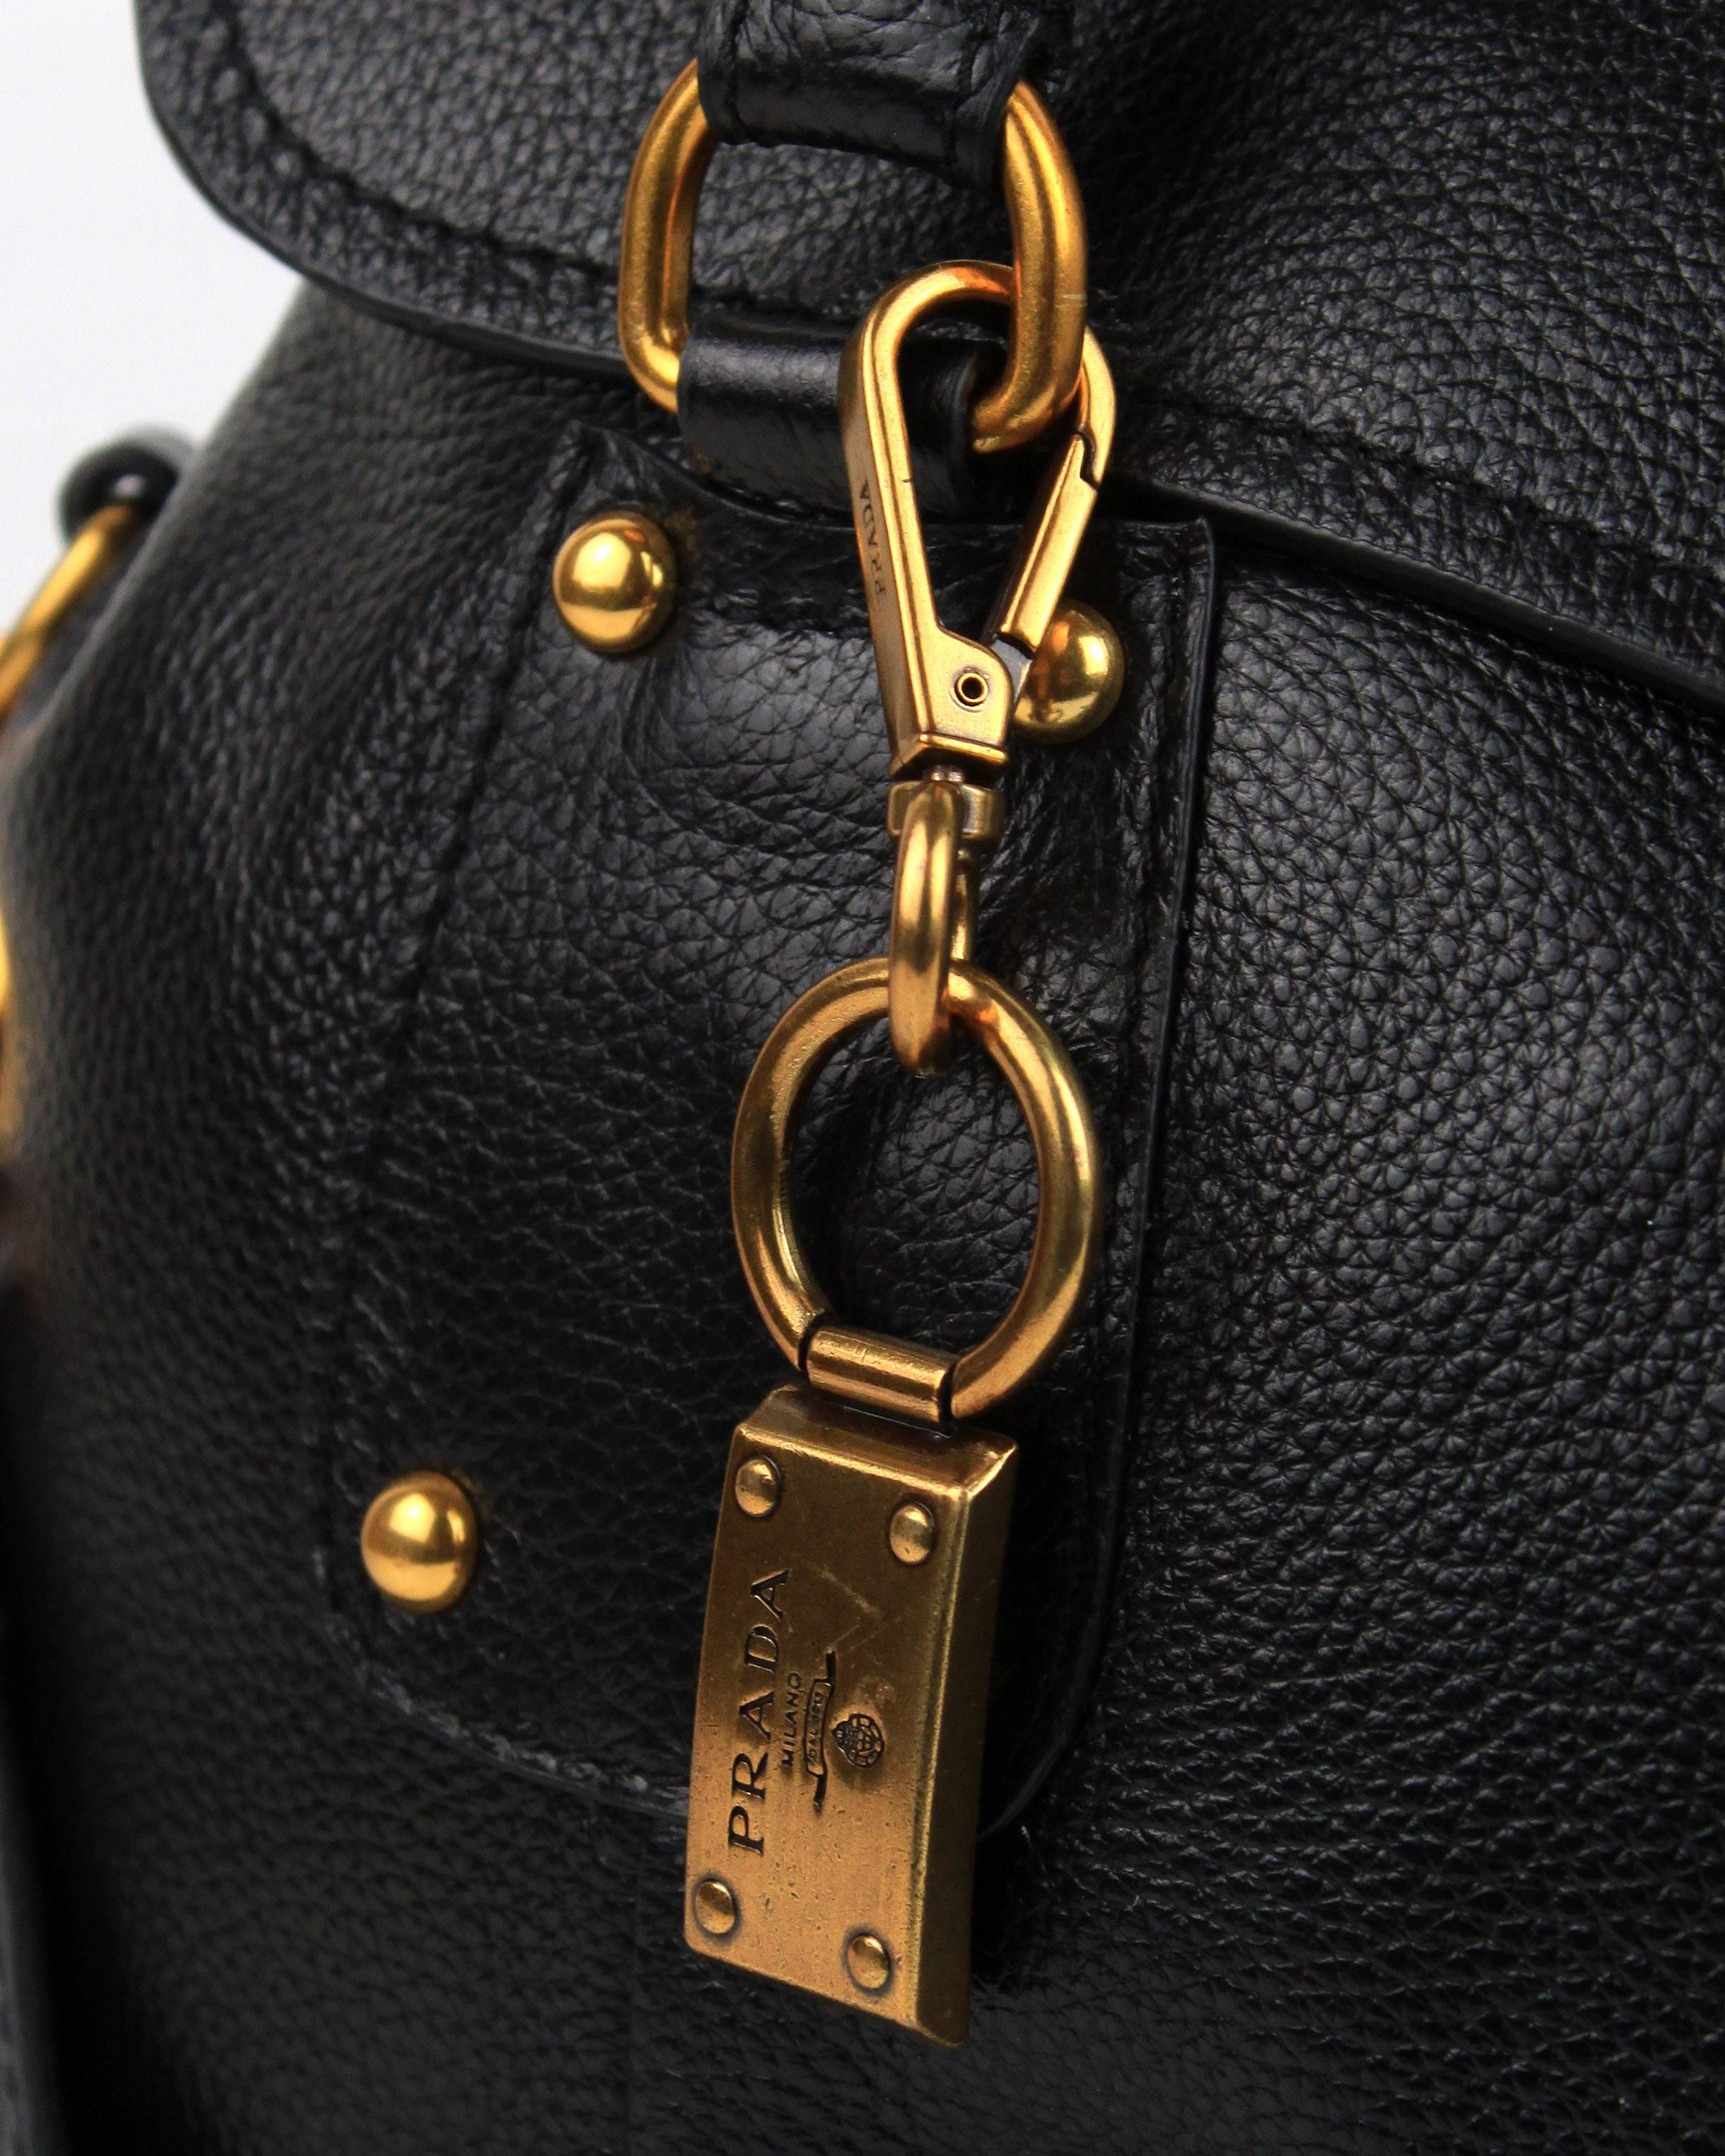 Prada Milled Leather Tote Bag - 8030 Black